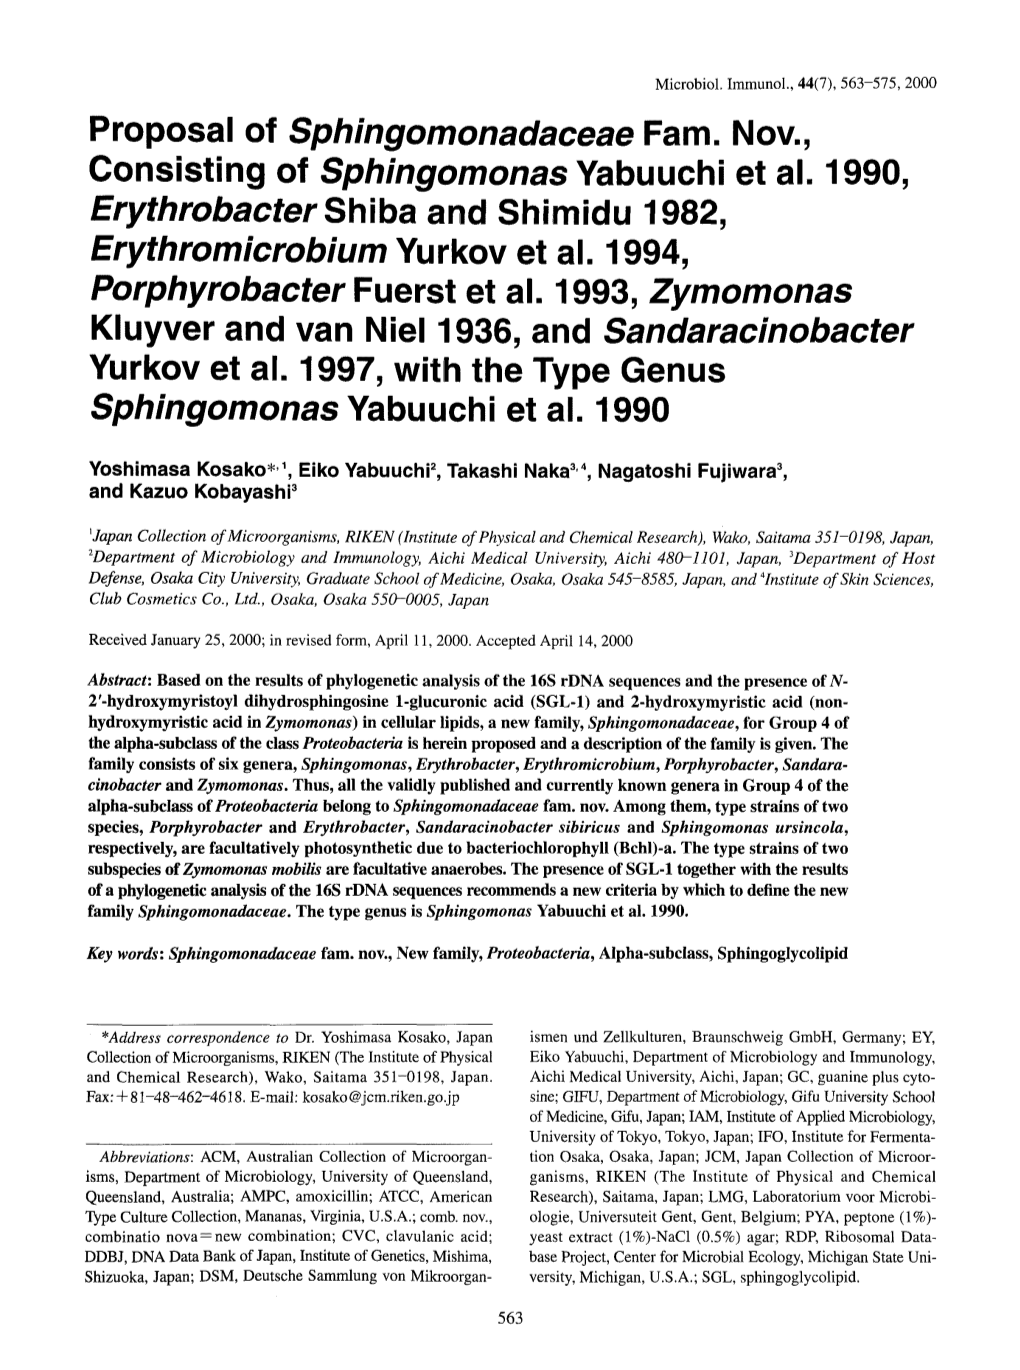 Proposal of Sphingomonadaceae Fam. Nov., Consisting of Sphingomonas Yabuuchi Et Al. 1990, Erythrobacter Shiba and Shimidu 1982, Erythromicrobium Yurkov Et Al